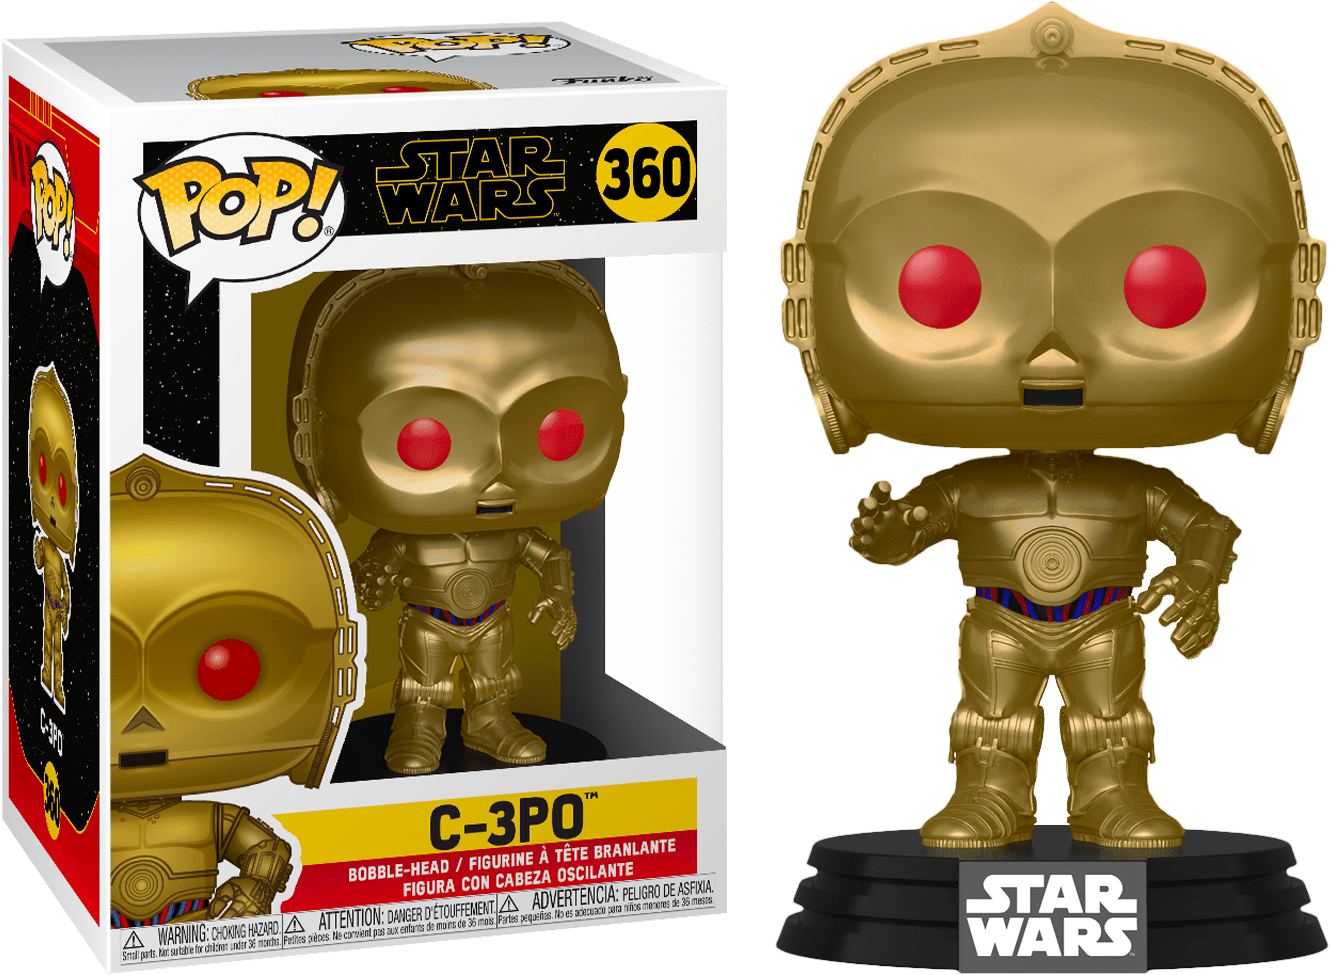 Star Wars: The Rise of Skywalker Funko Pop! Figures